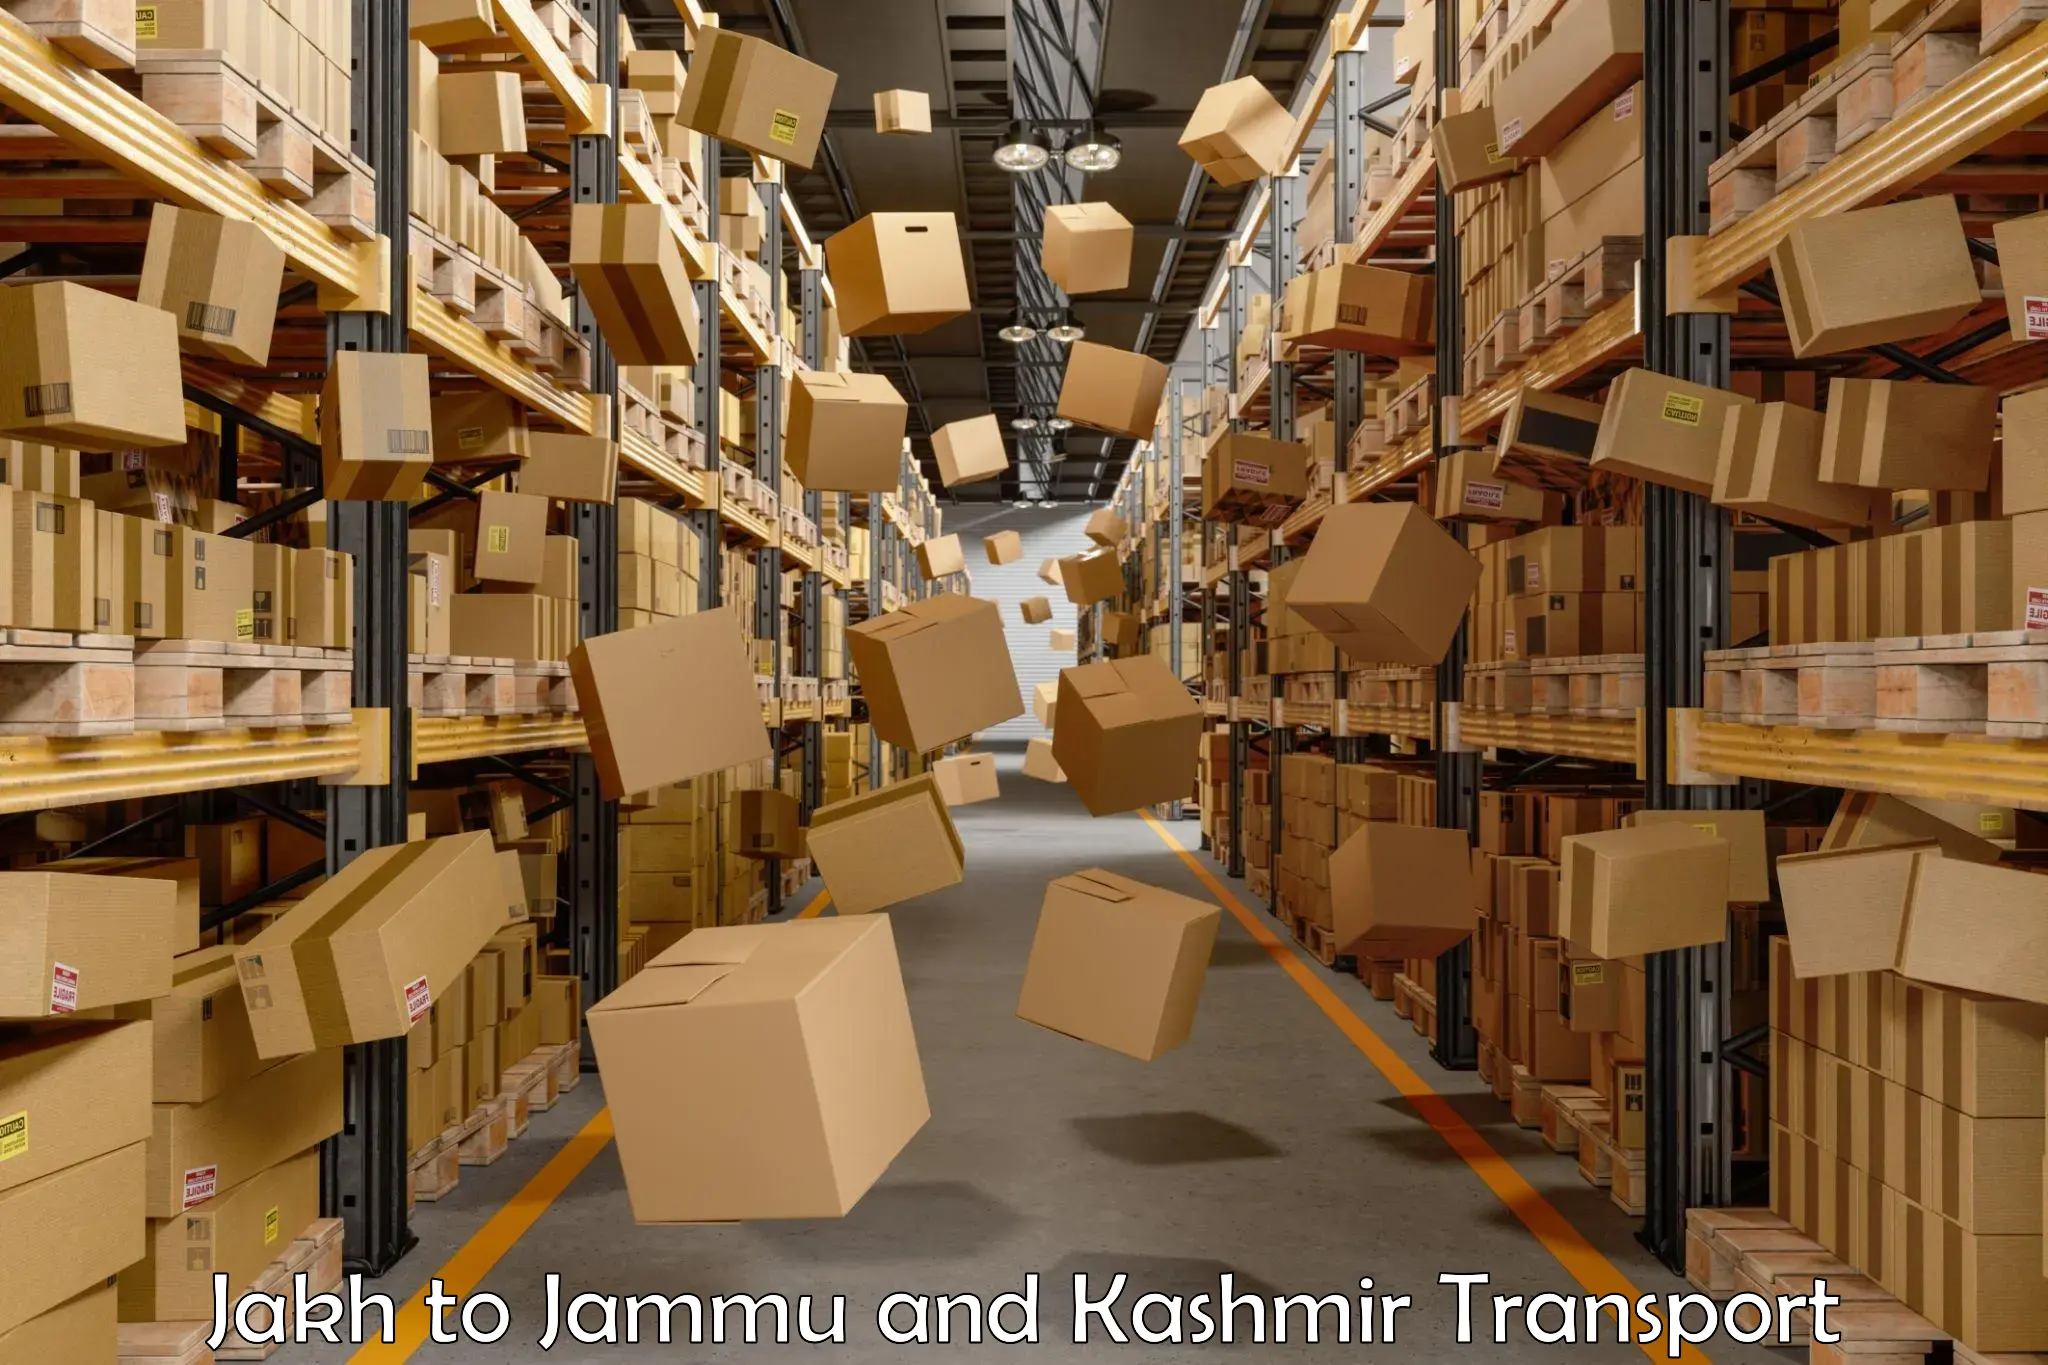 Daily transport service Jakh to Srinagar Kashmir